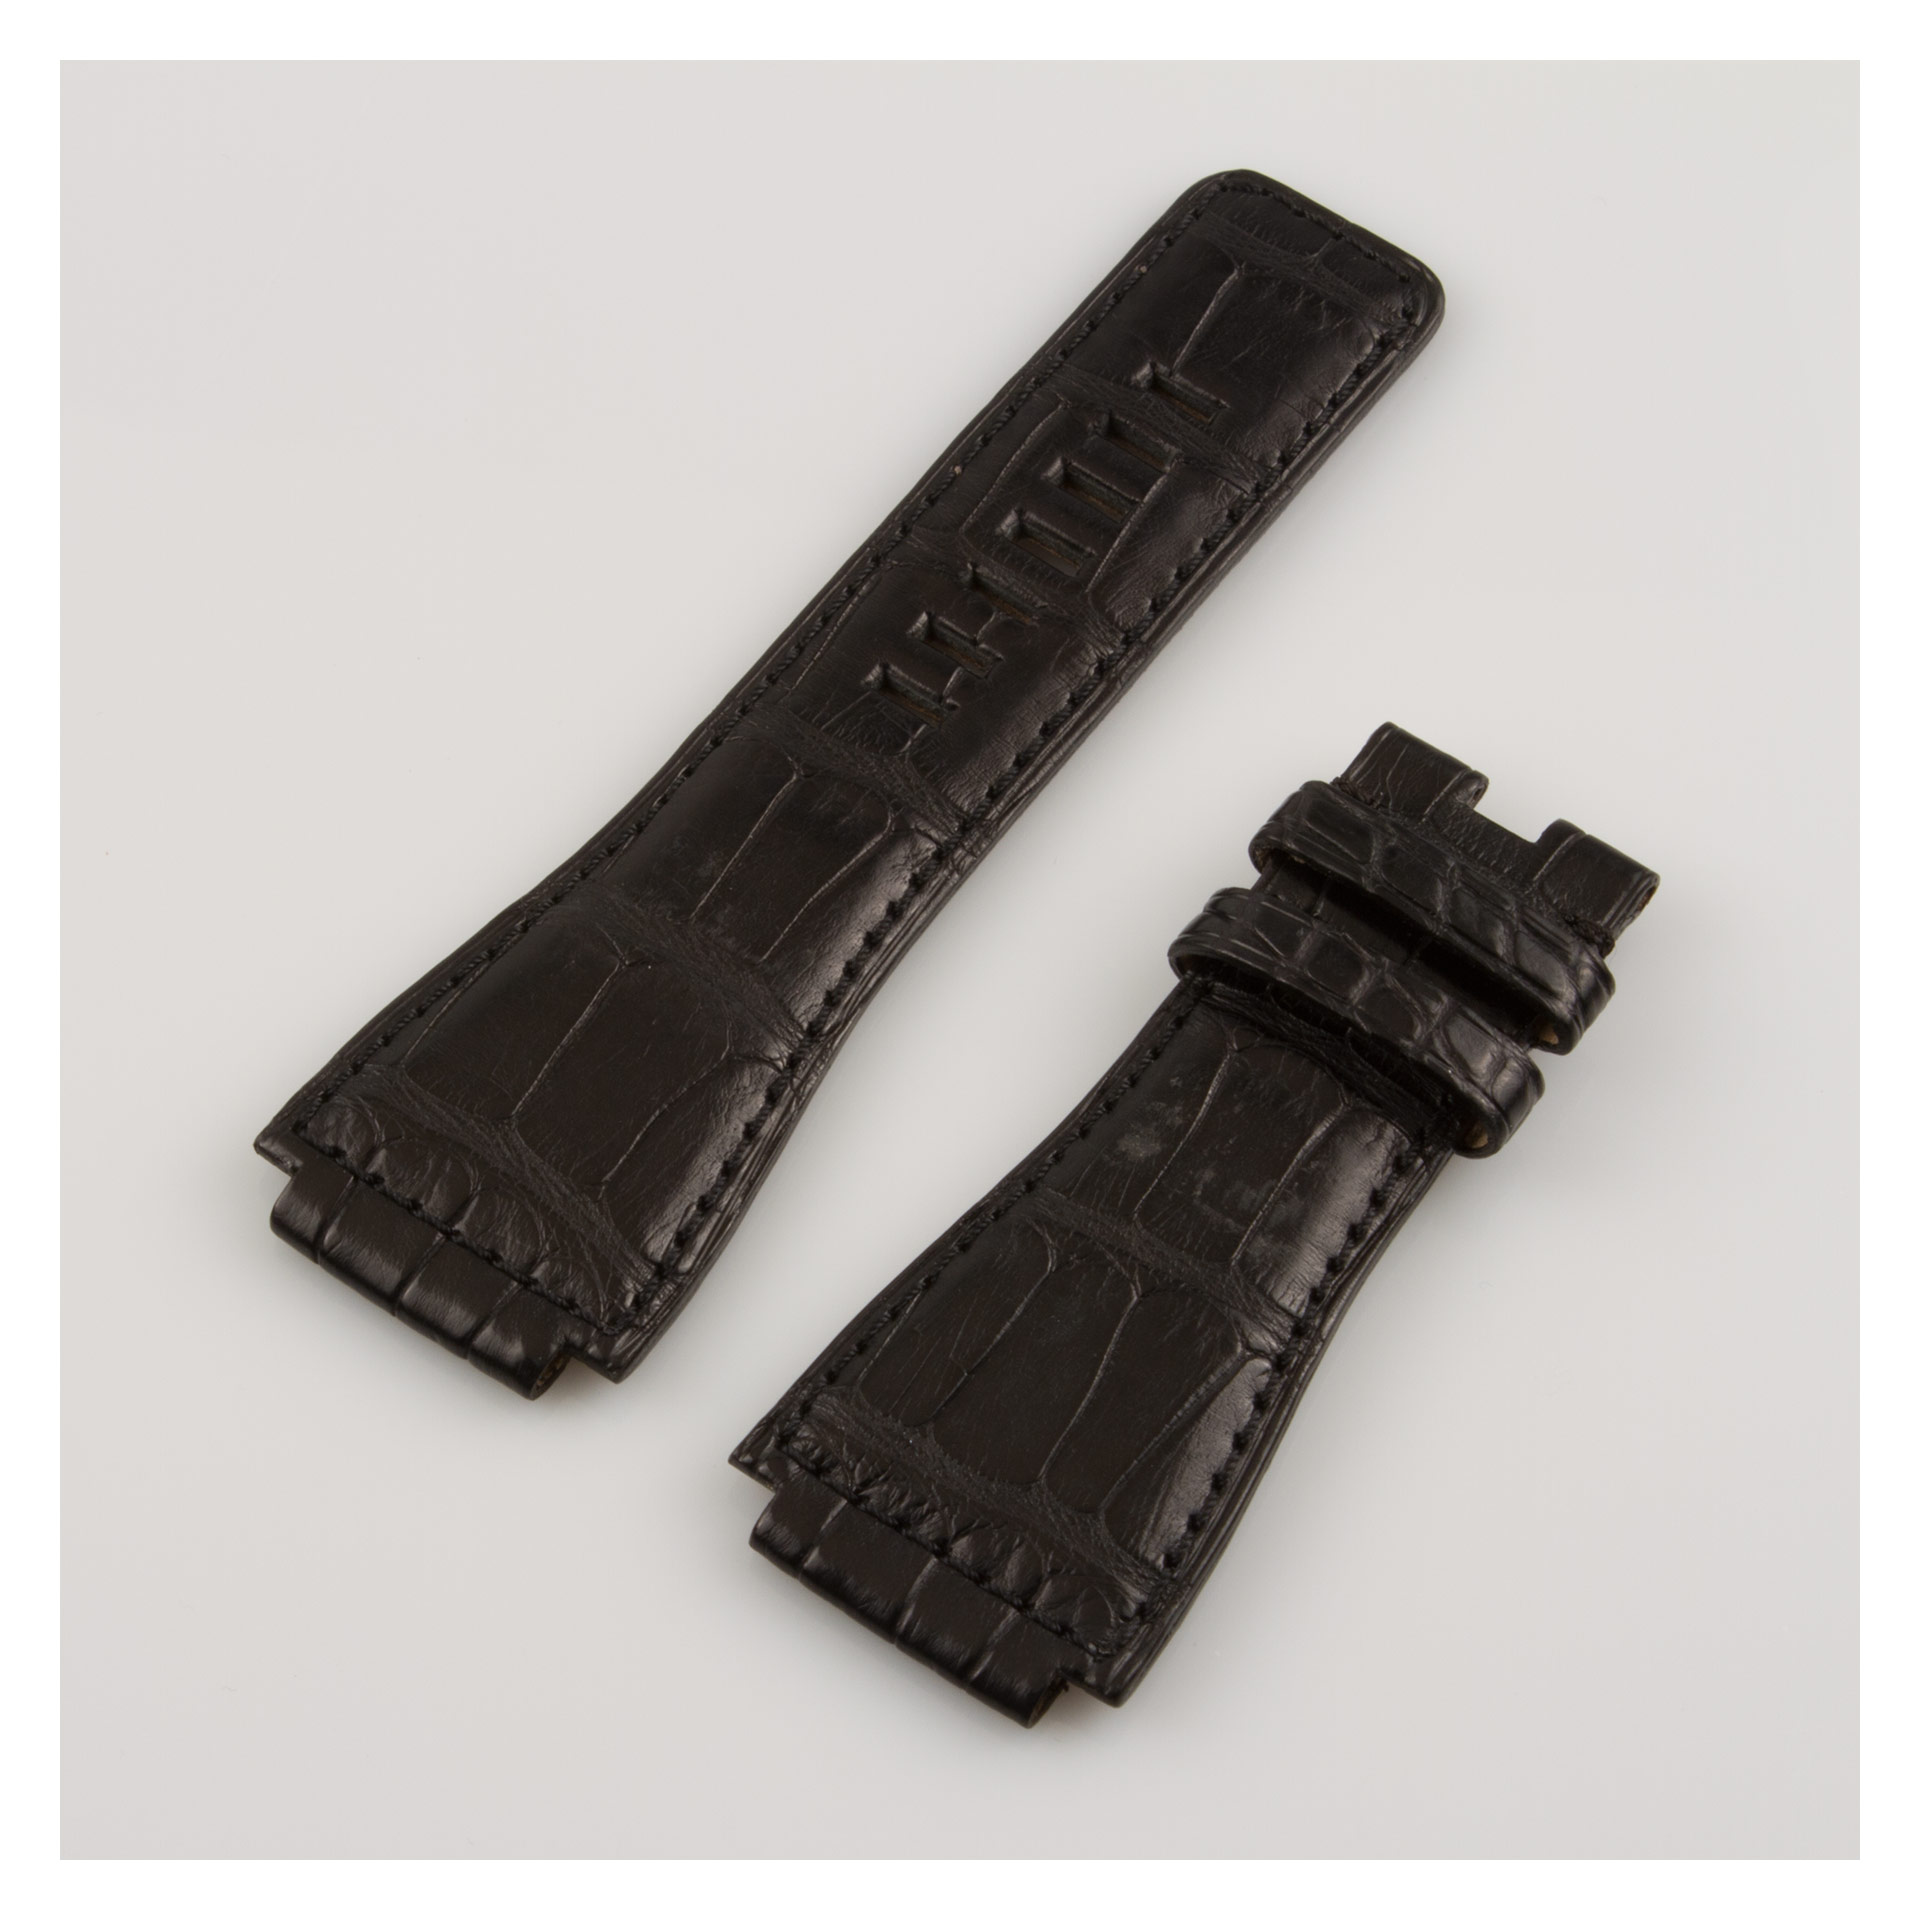 Bell & Ross black alligator strap (24x24).